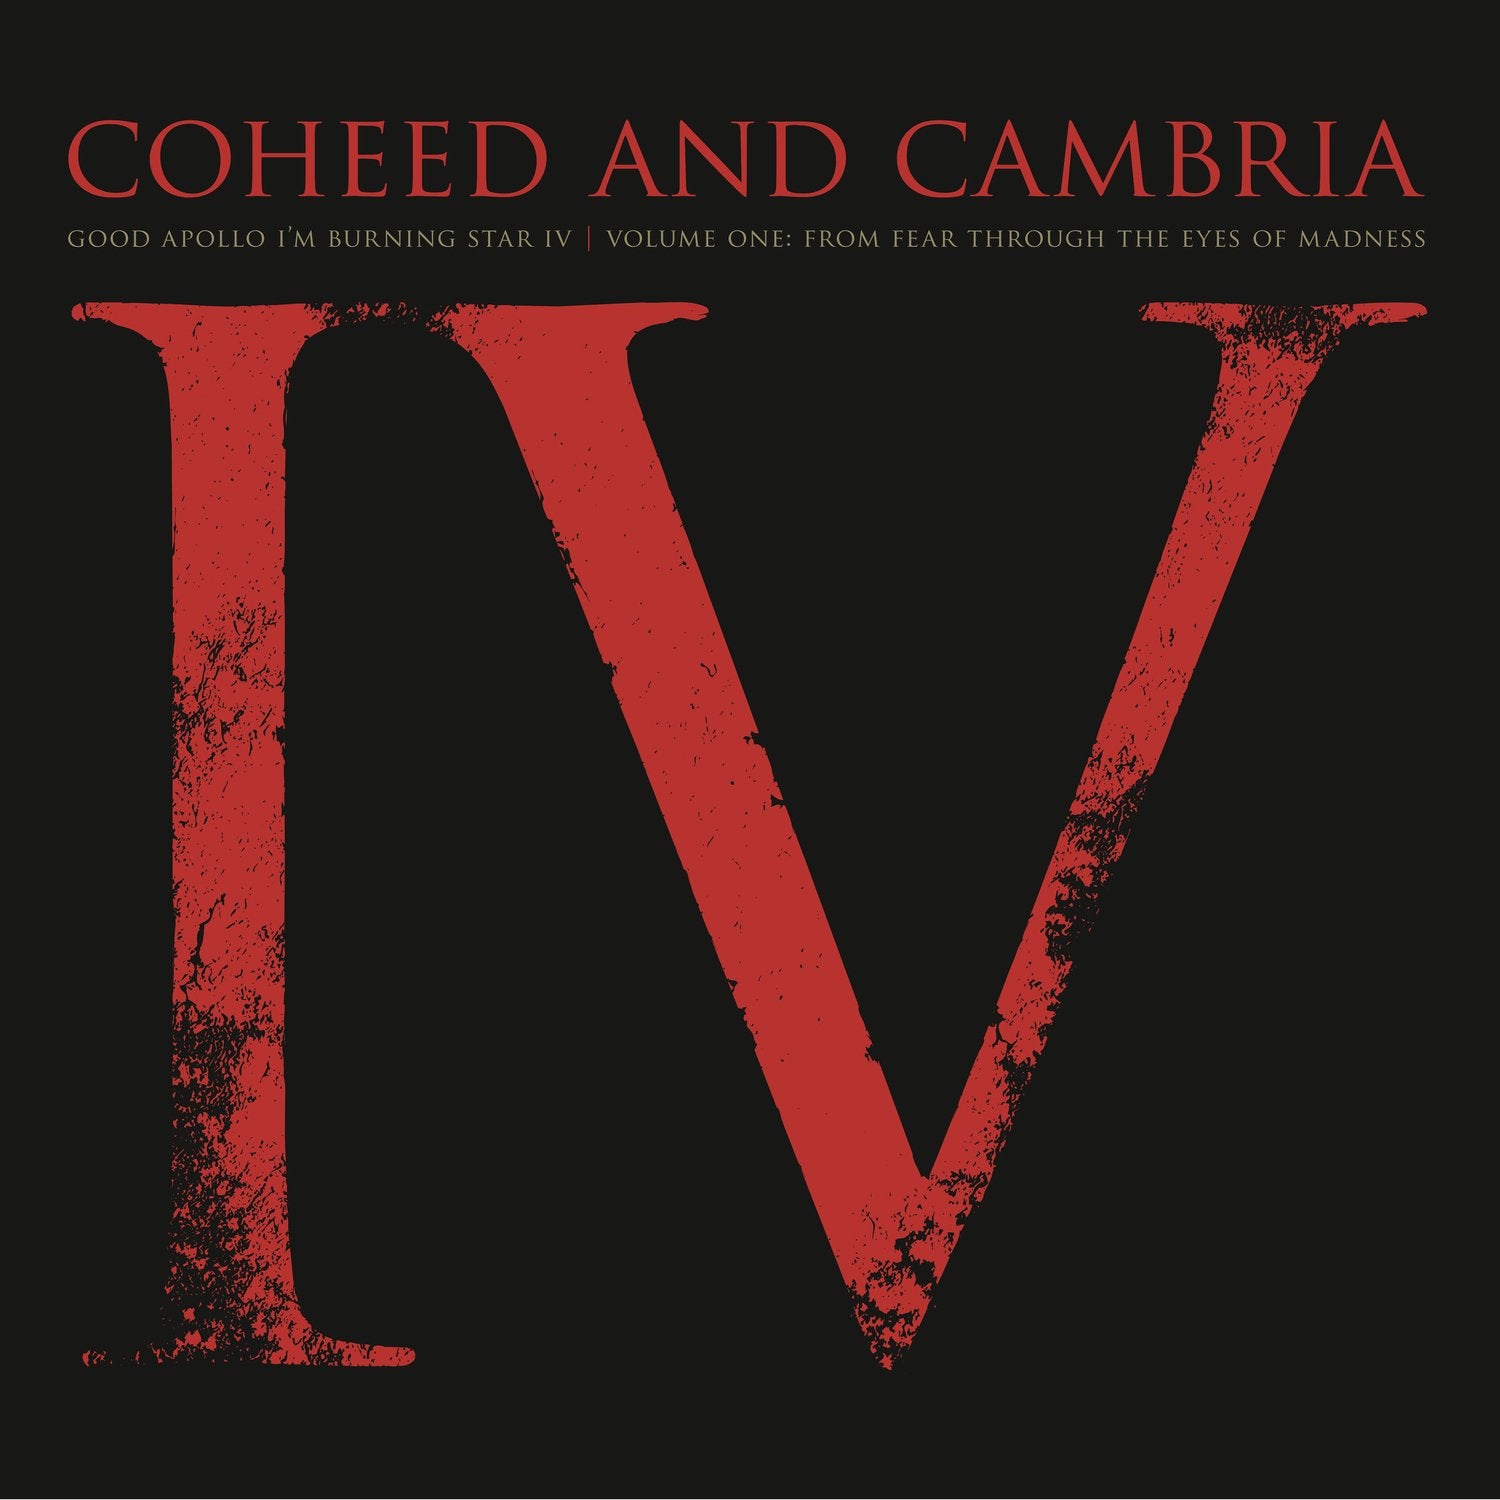 COHEED AND CAMBRIA - GOOD APOLLO I'M BURNING STAR IV Vinyl 2xLP